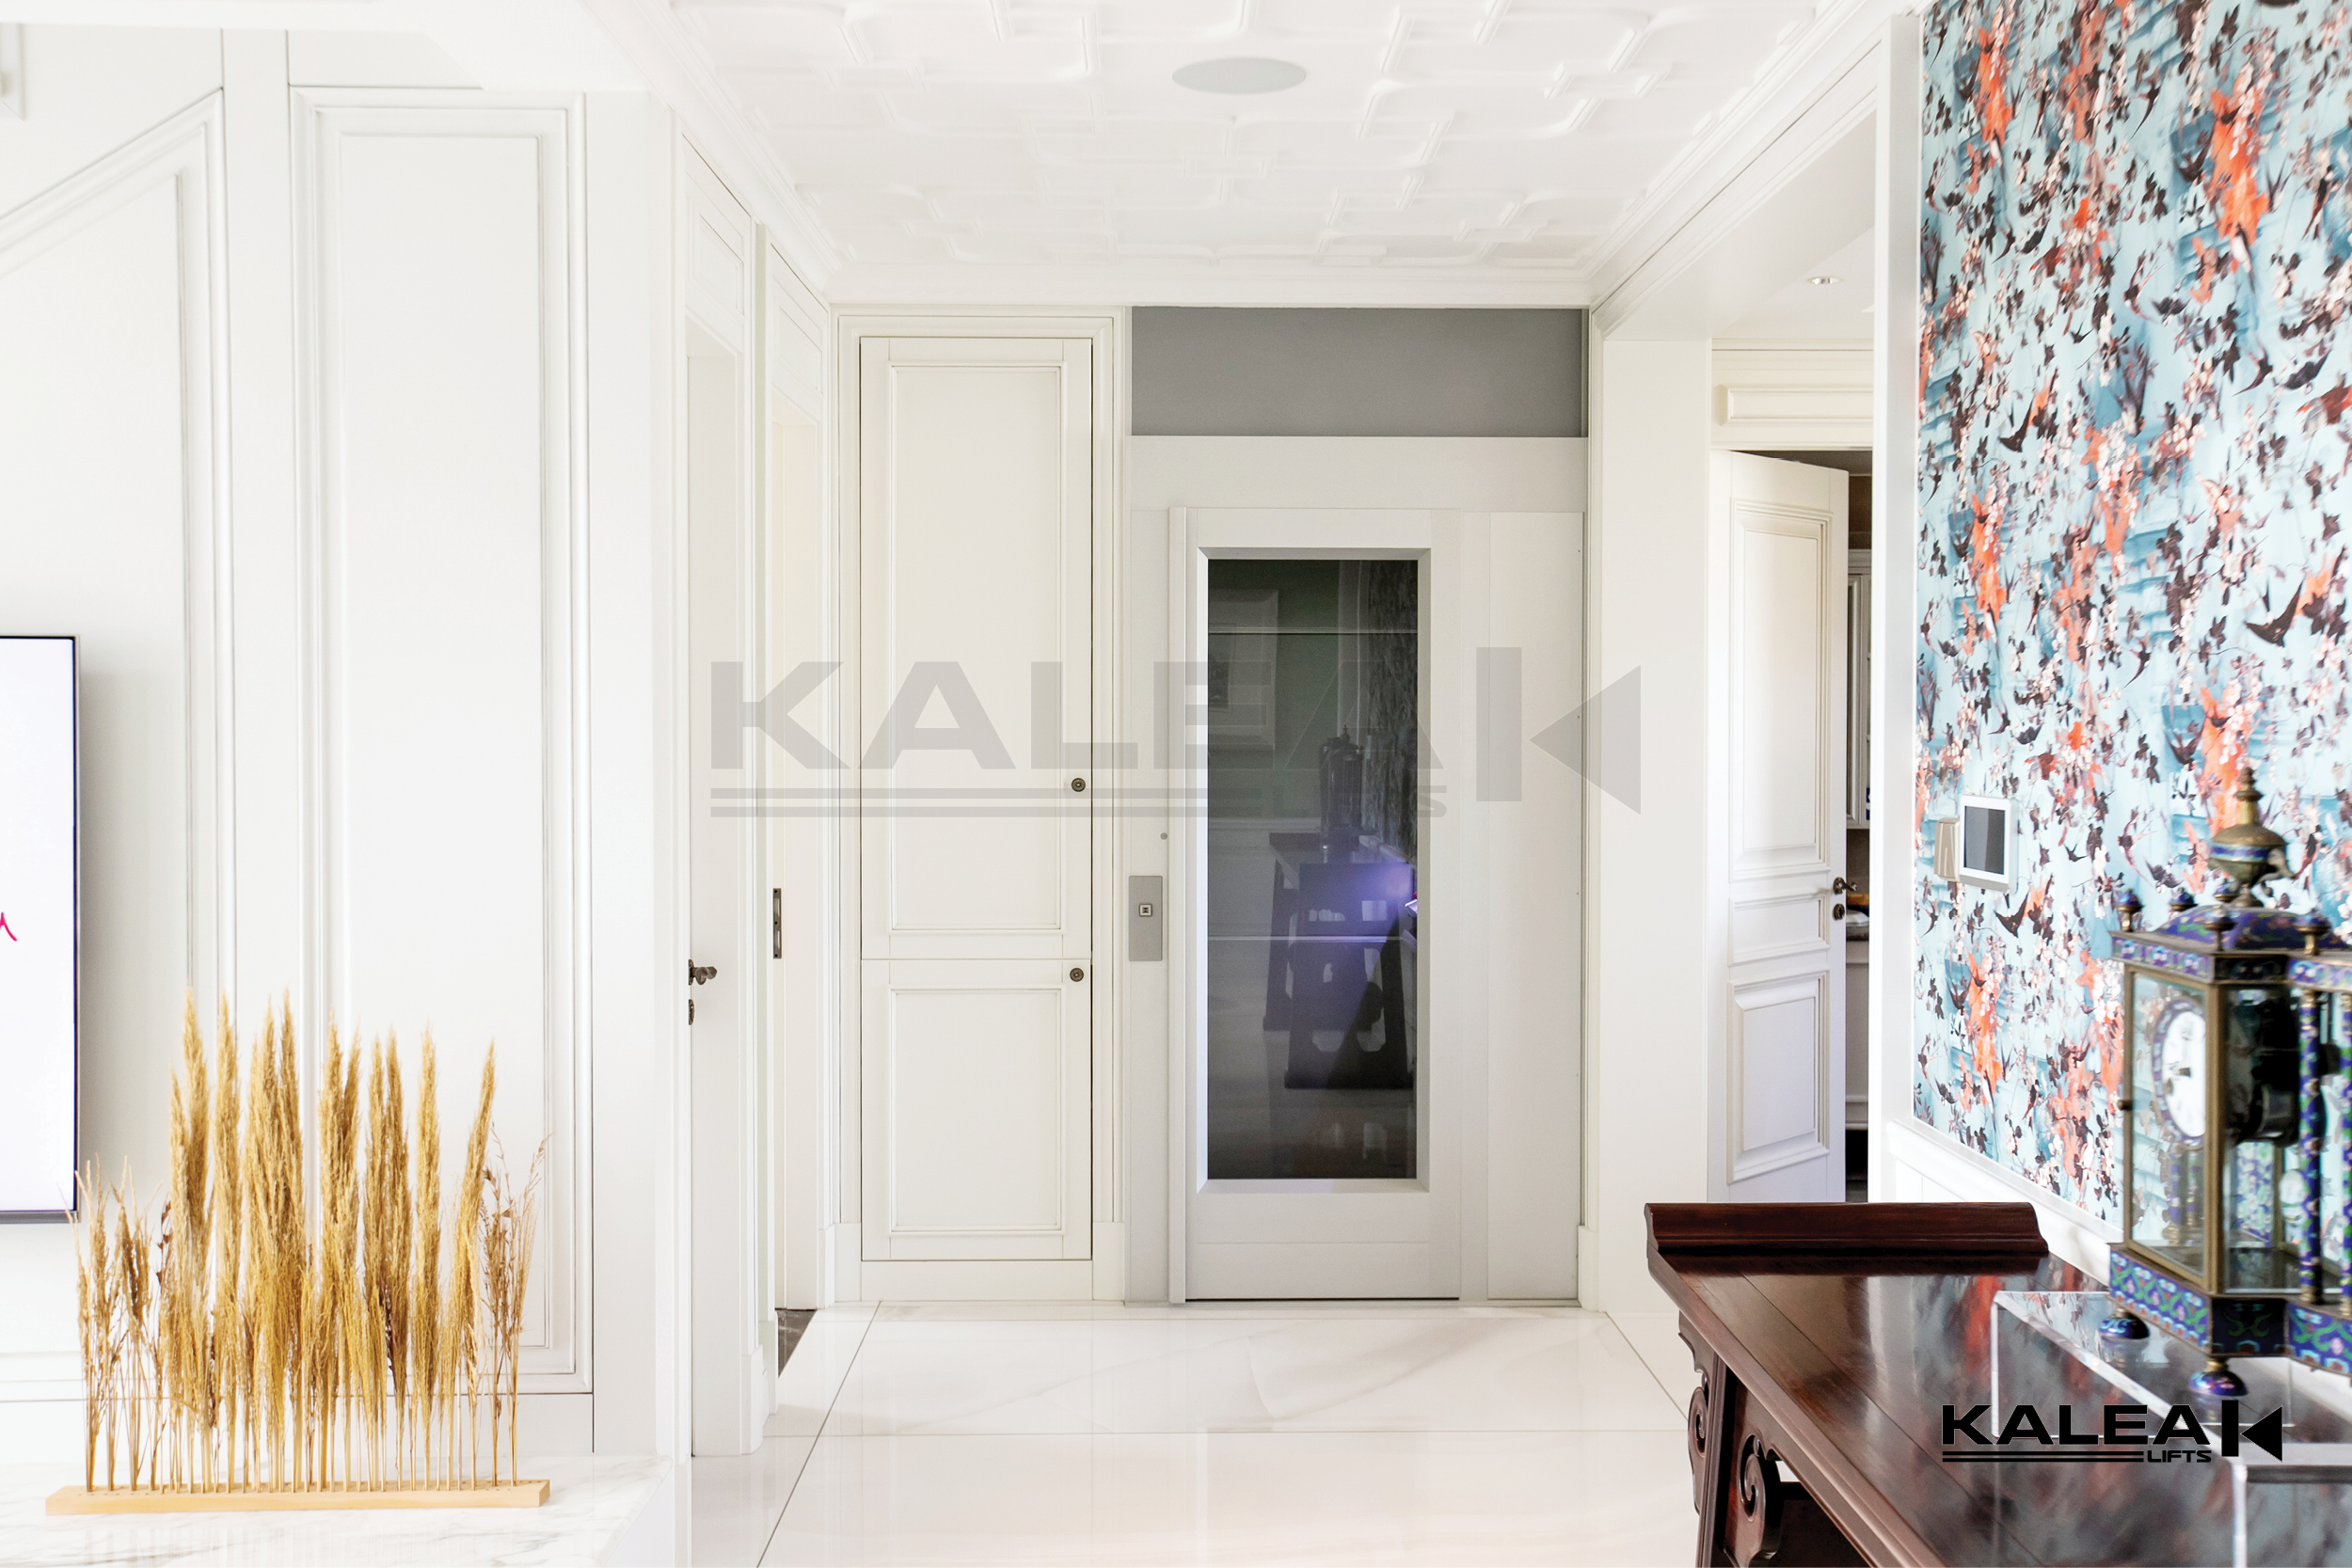 Private Home,Klassic model, Aluminium Shaft Powder Coated White RAL9016